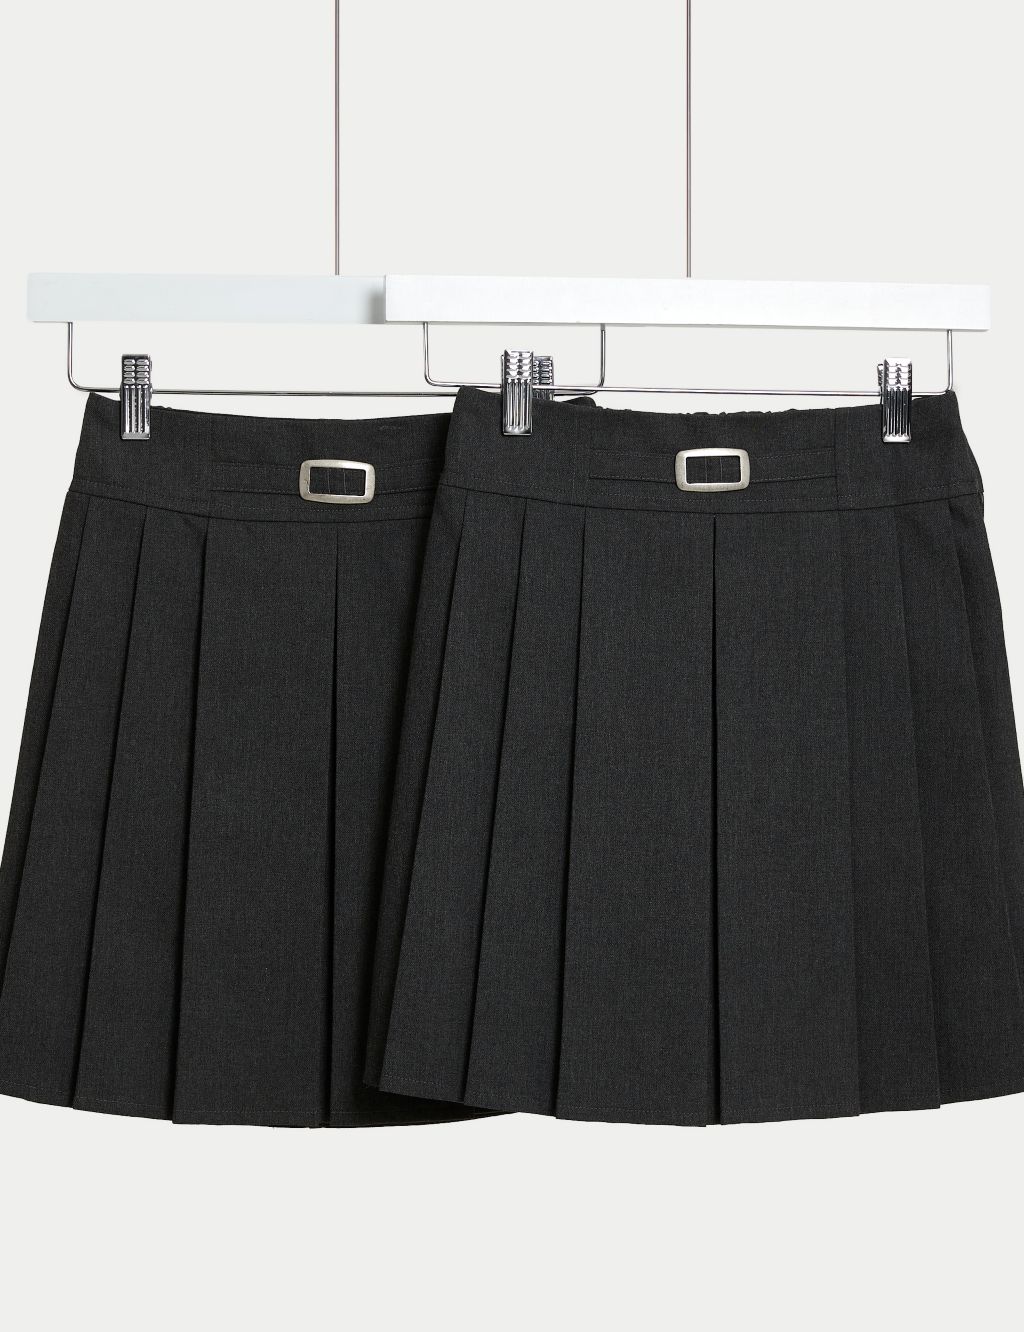 2pk Girls' Permanent Pleats School Skirts (2-18 Yrs) image 1